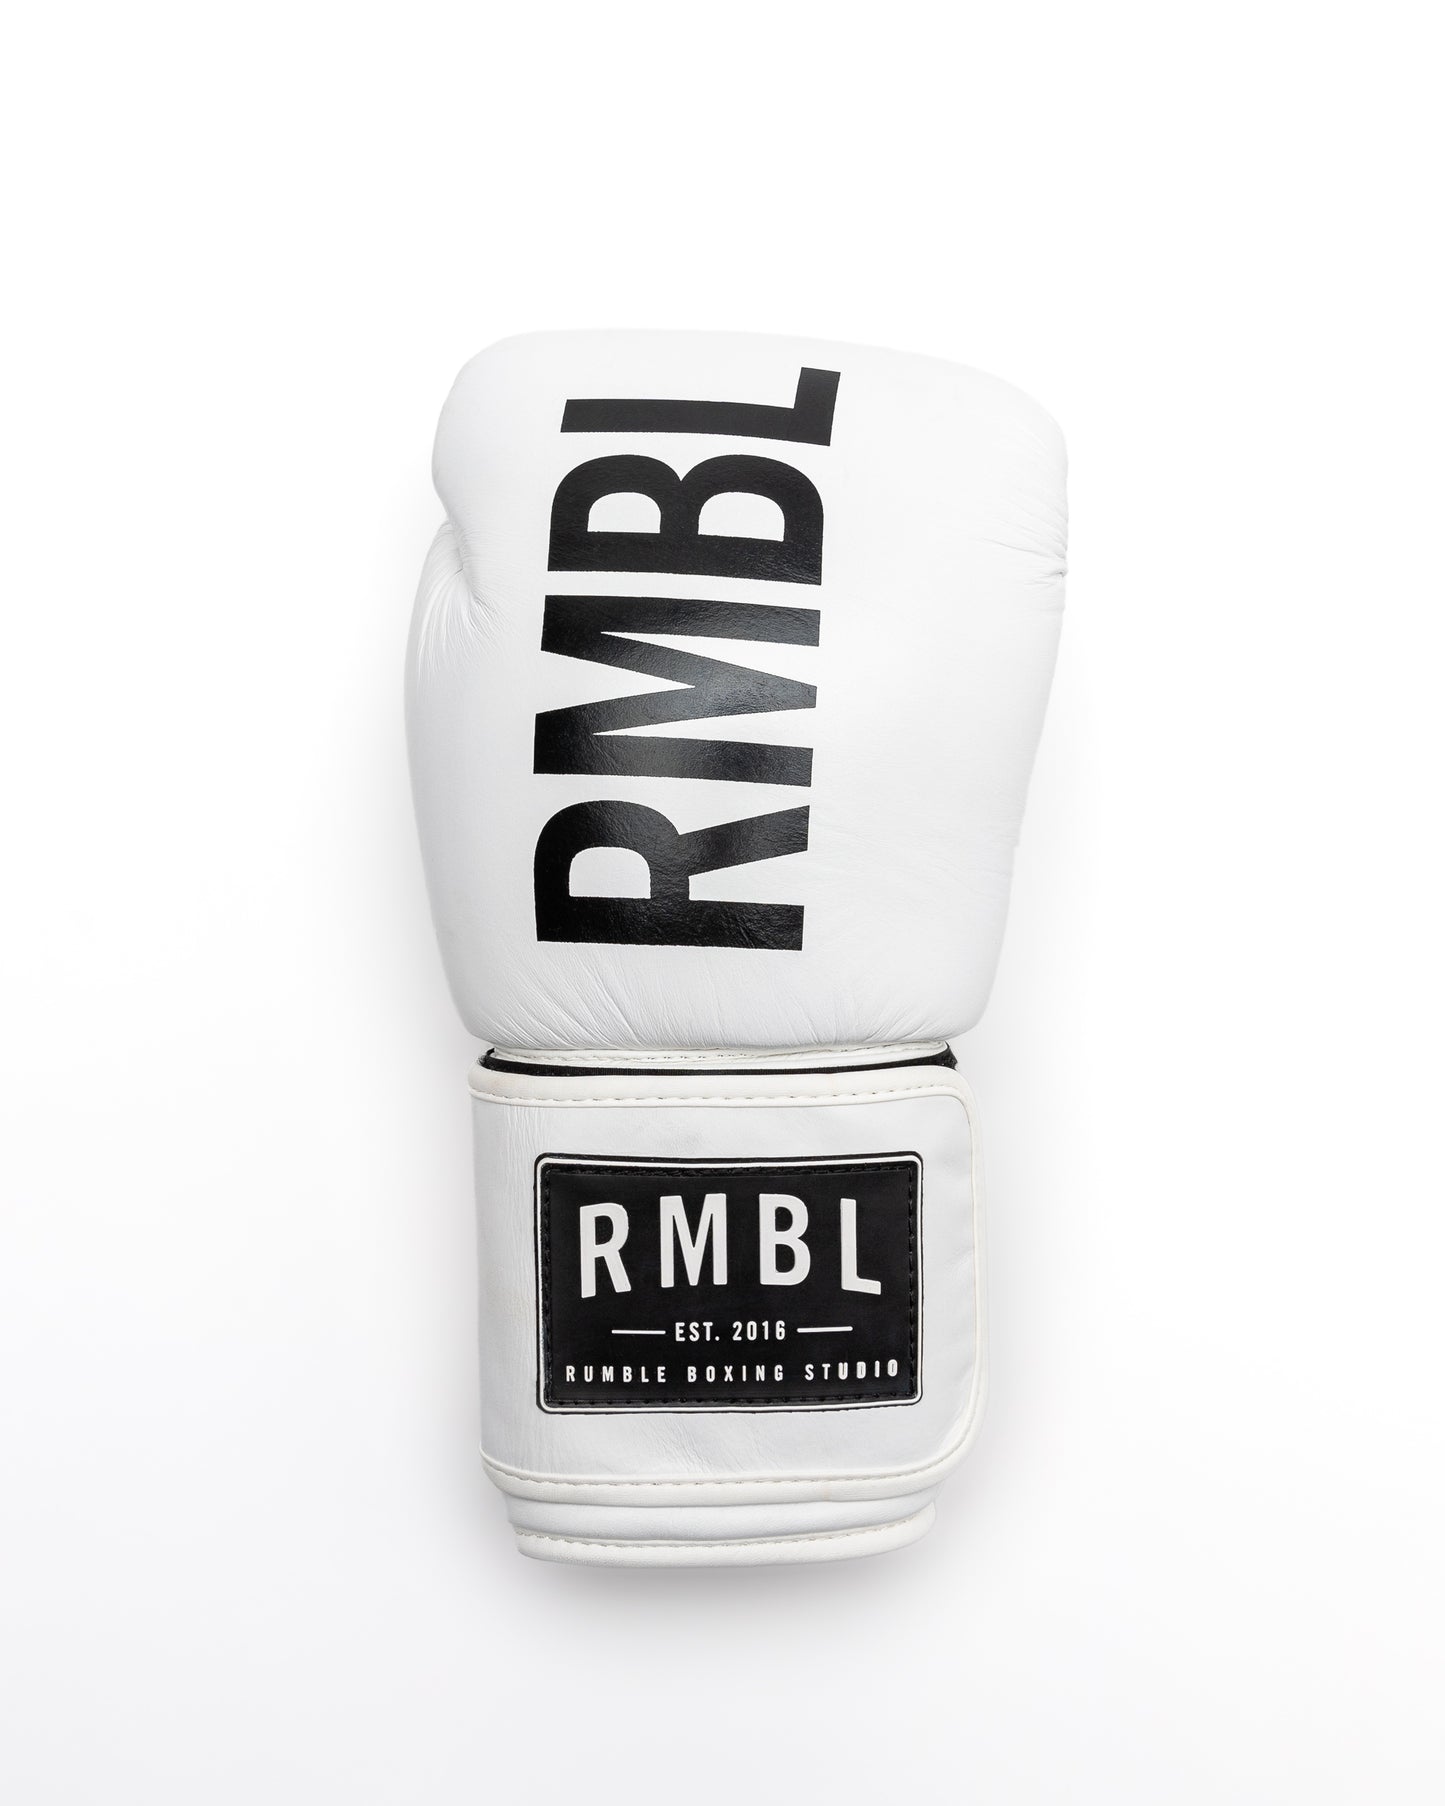 Premium RMBL Leather Gloves Vertical White